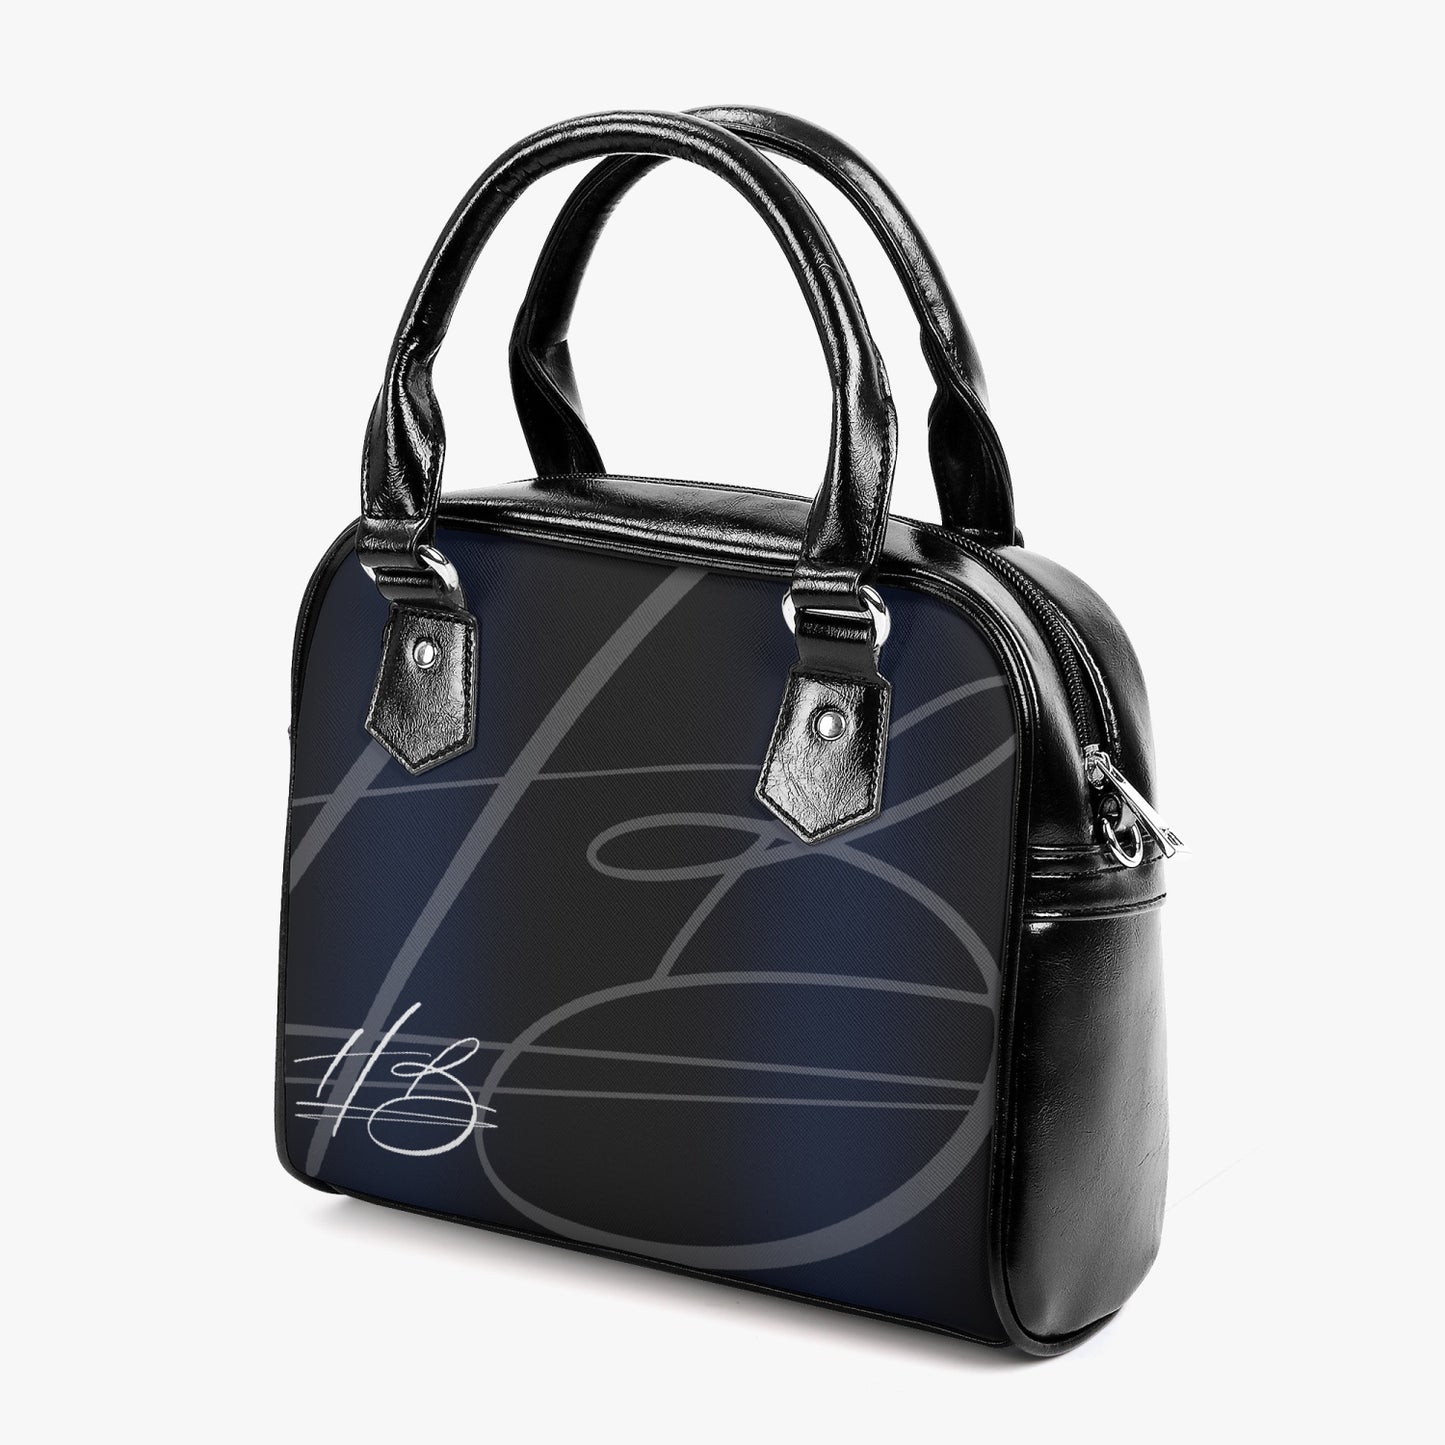 HB Vegan Leather Shoulder Bag - BluBlac Onyx